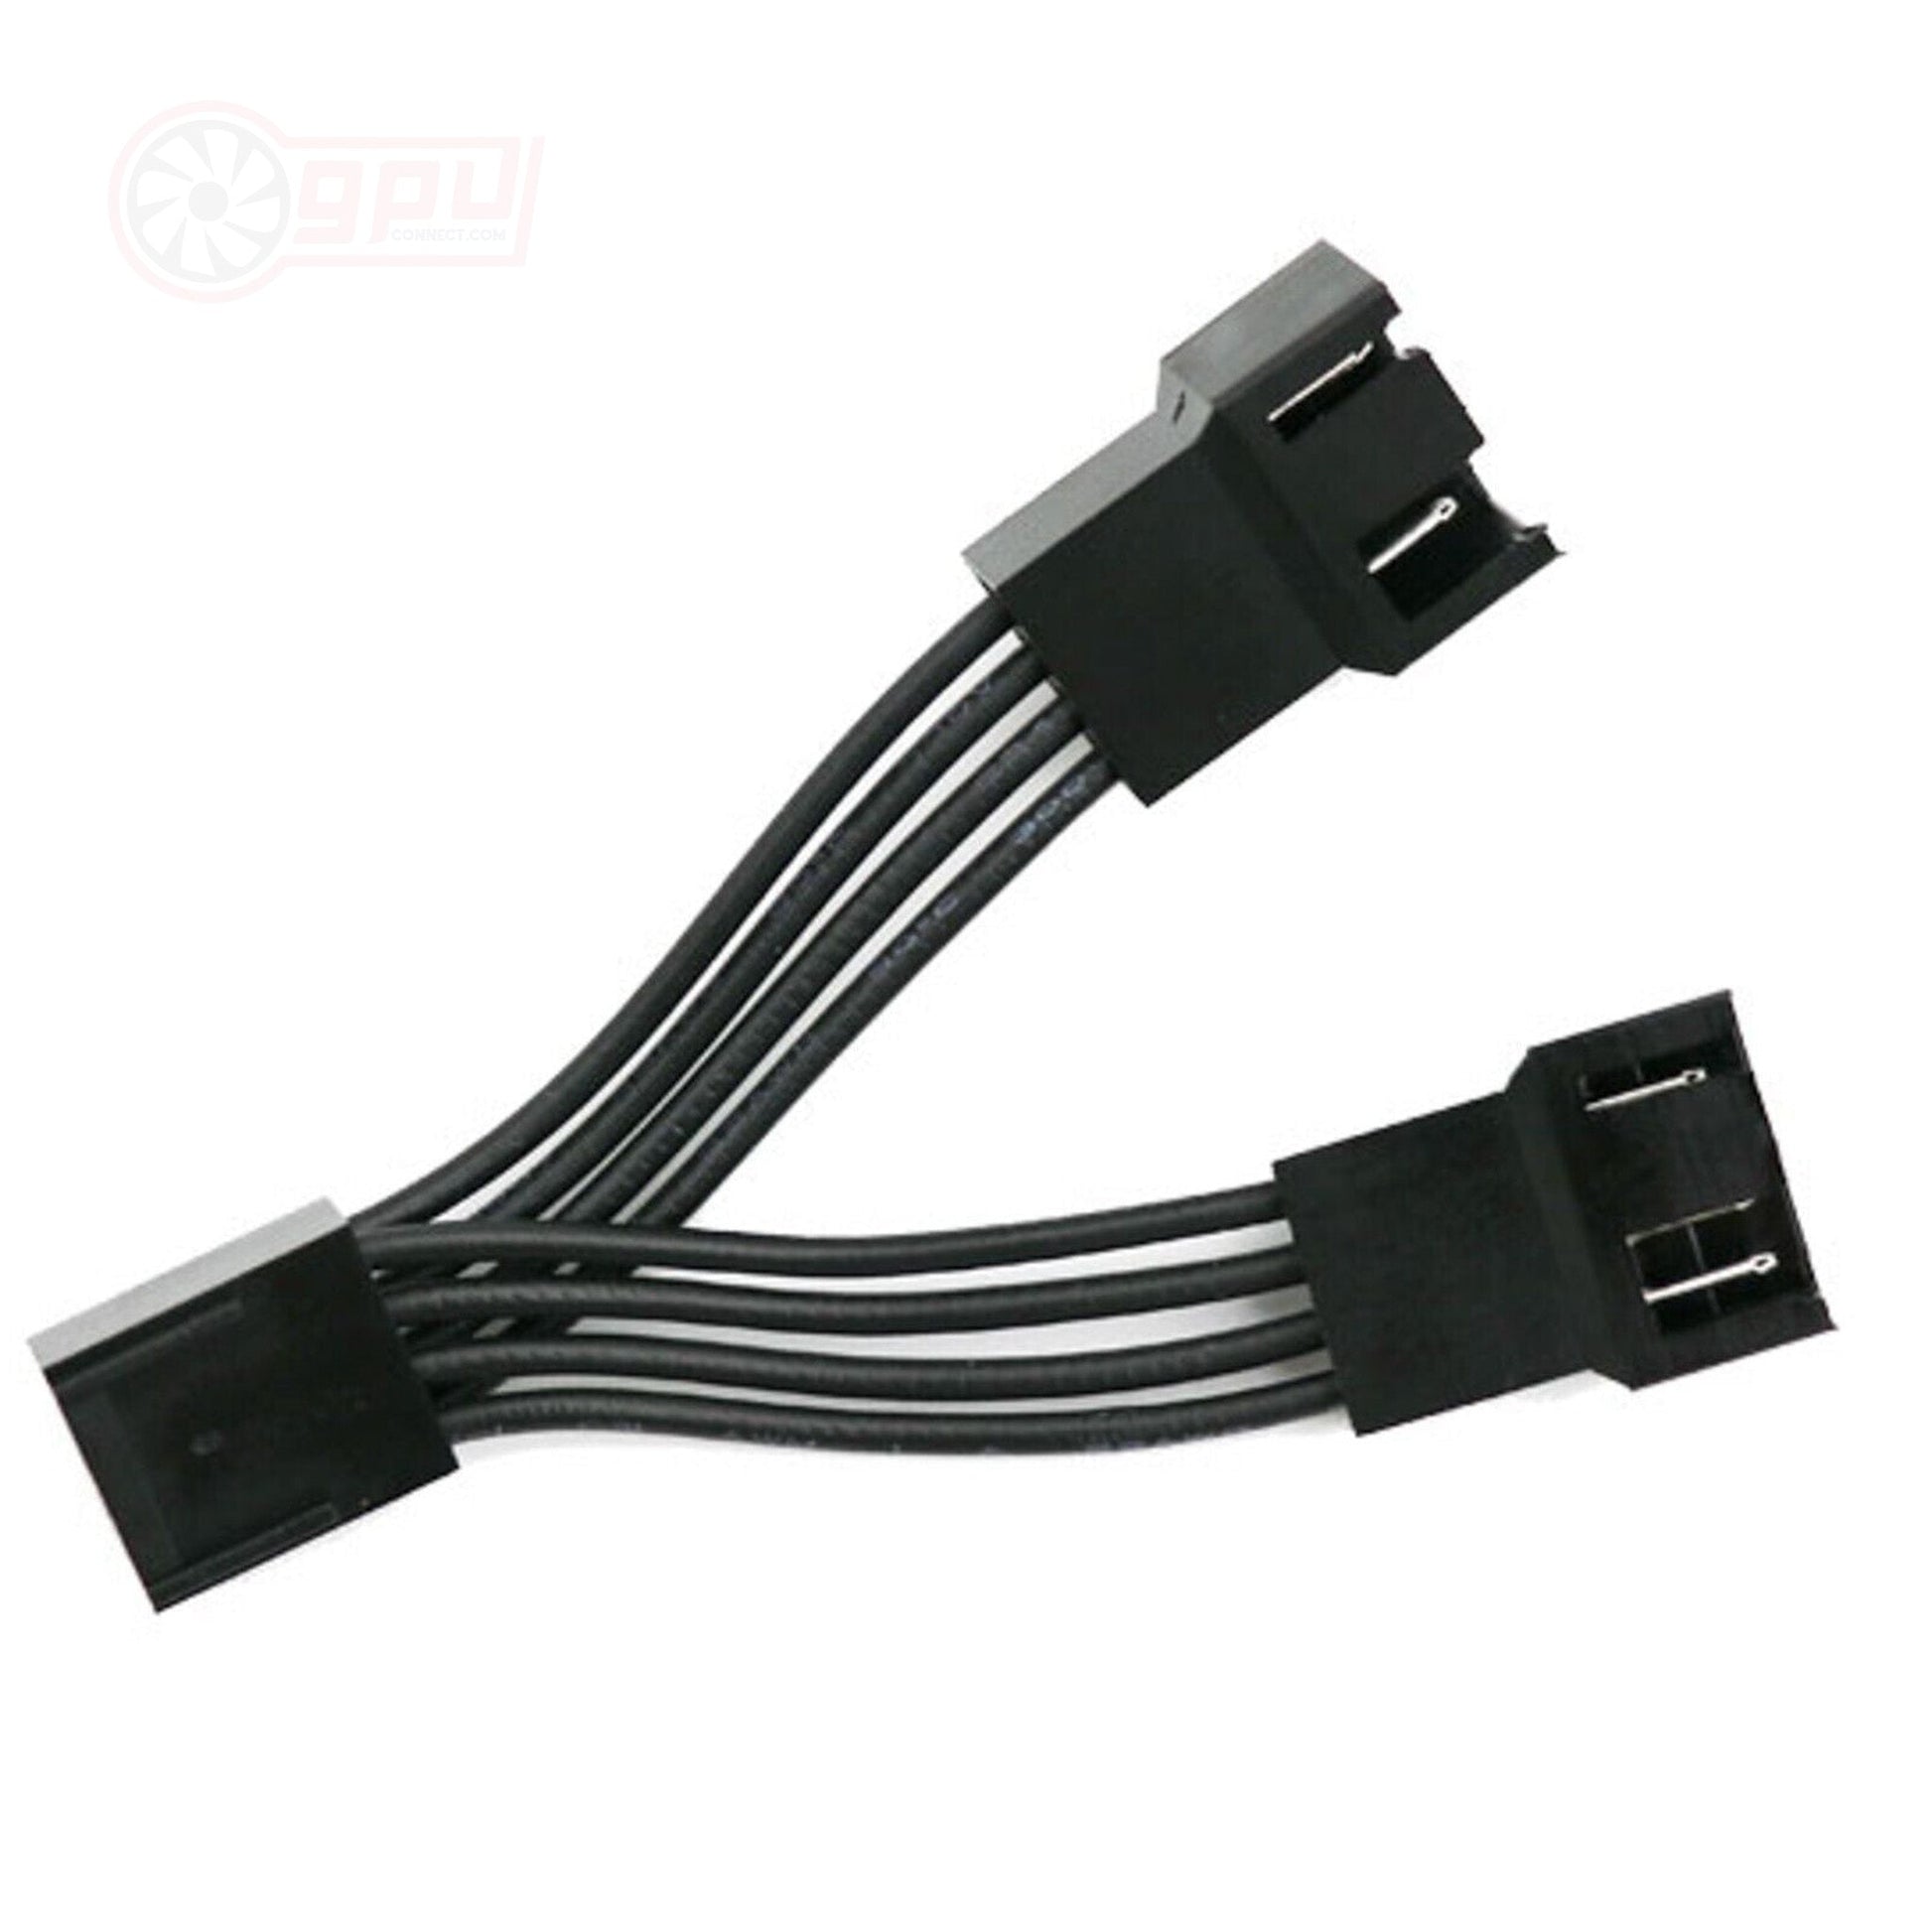 Mini Fan Splitter Cable Dual PWM for CPU / GPU - 5cm Black - GPUCONNECT.COM